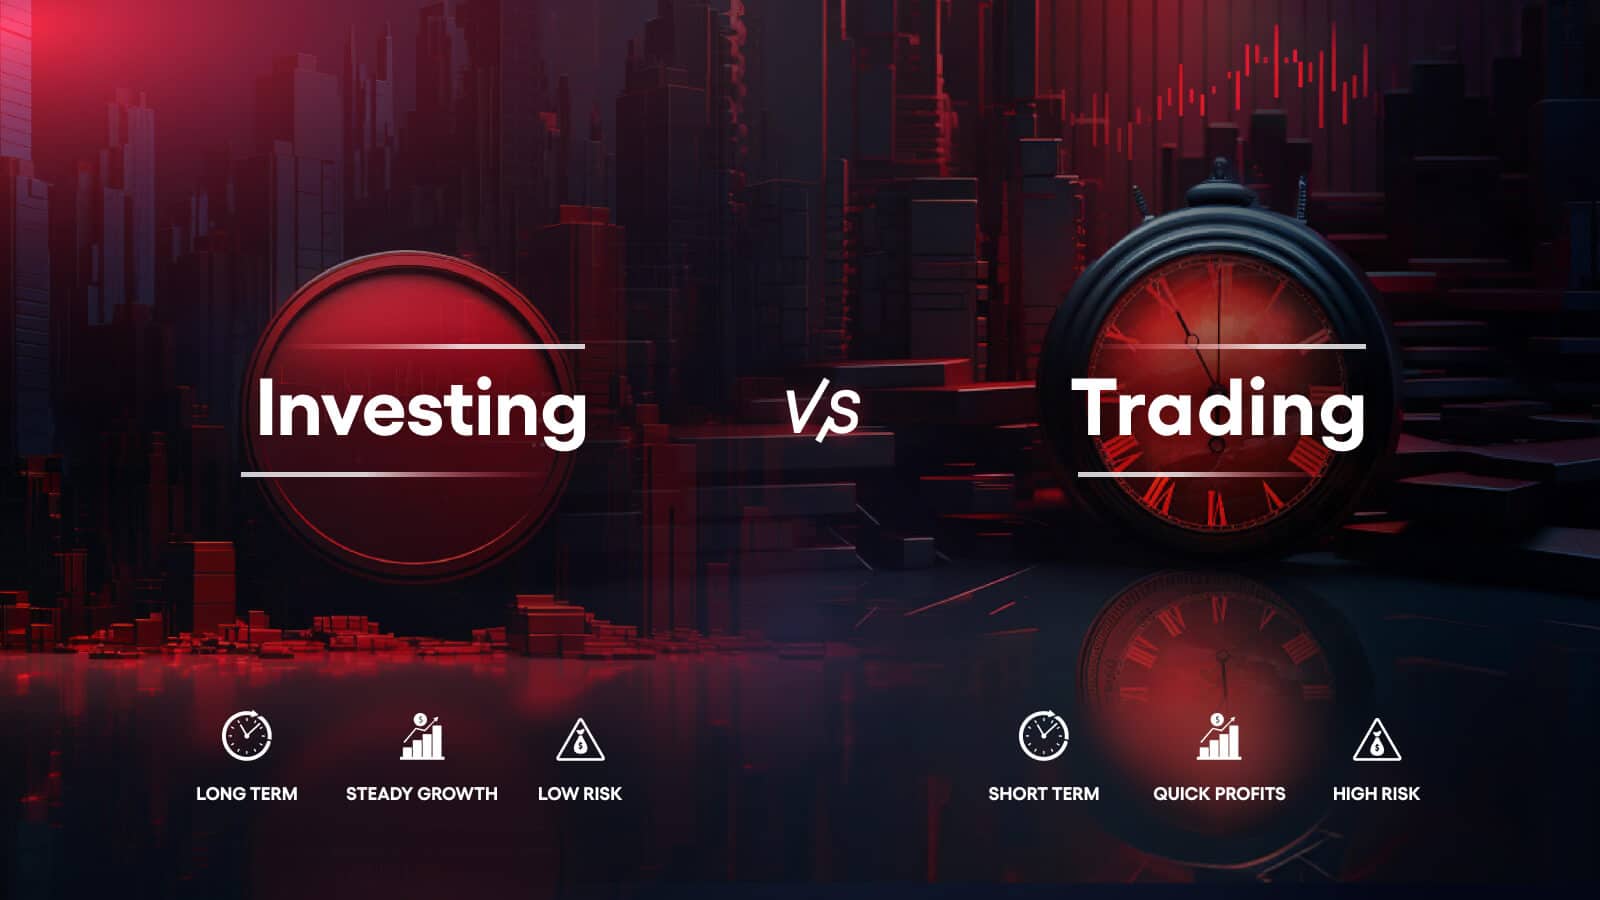 Visual representation of investing vs. trading with main characteristics of both